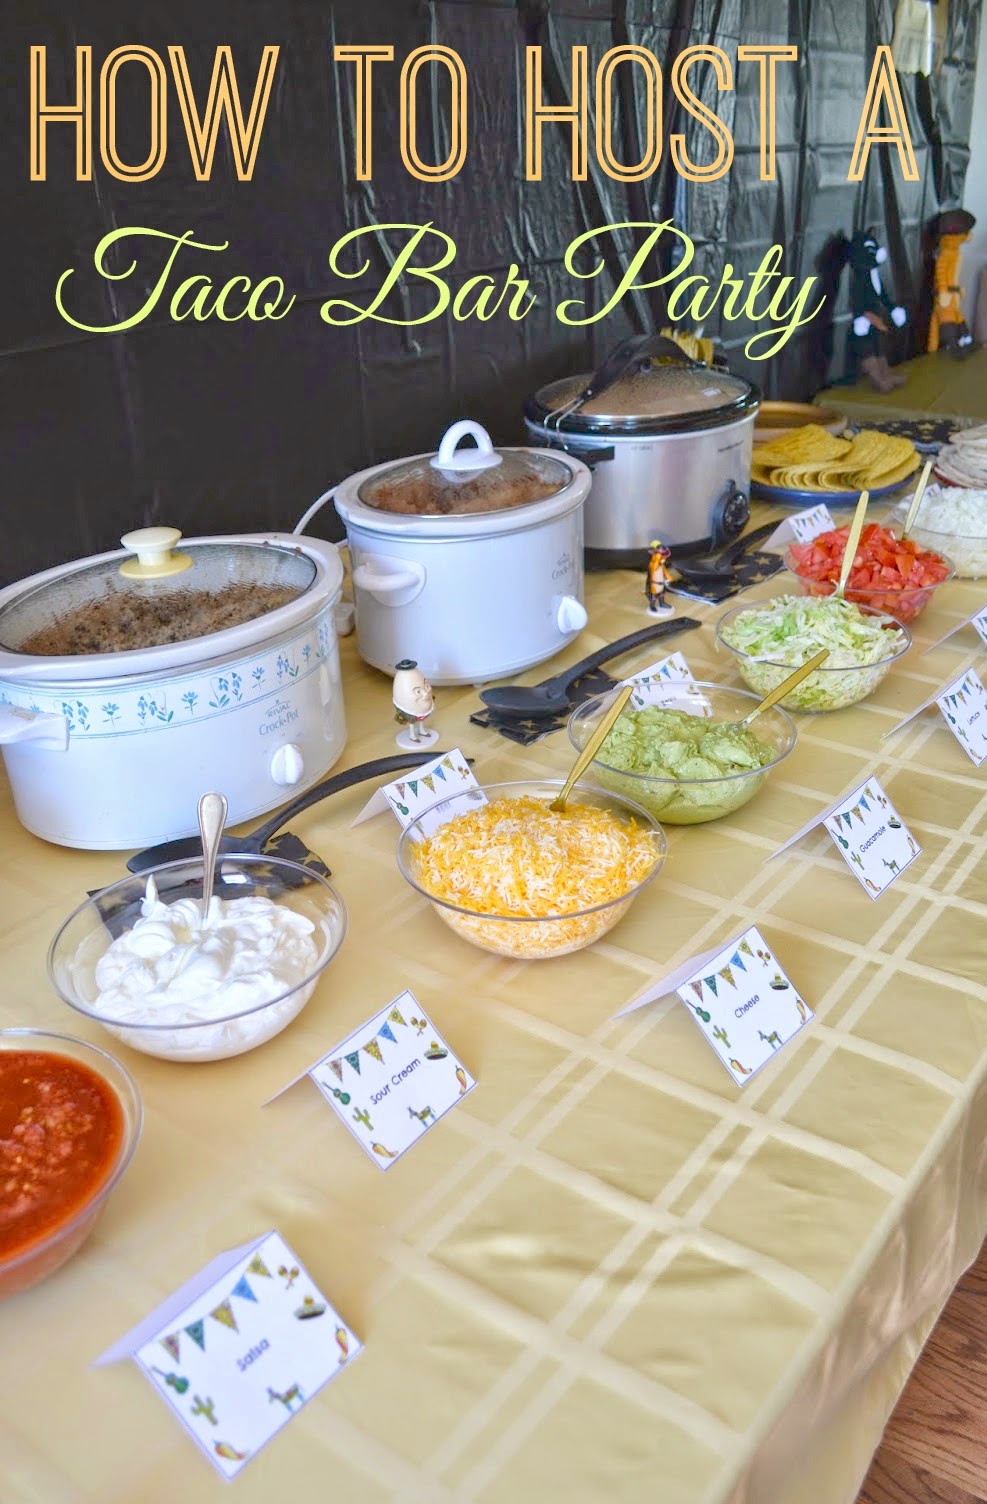  DIY Taco  Bar Party  Table Tents Free Printables 